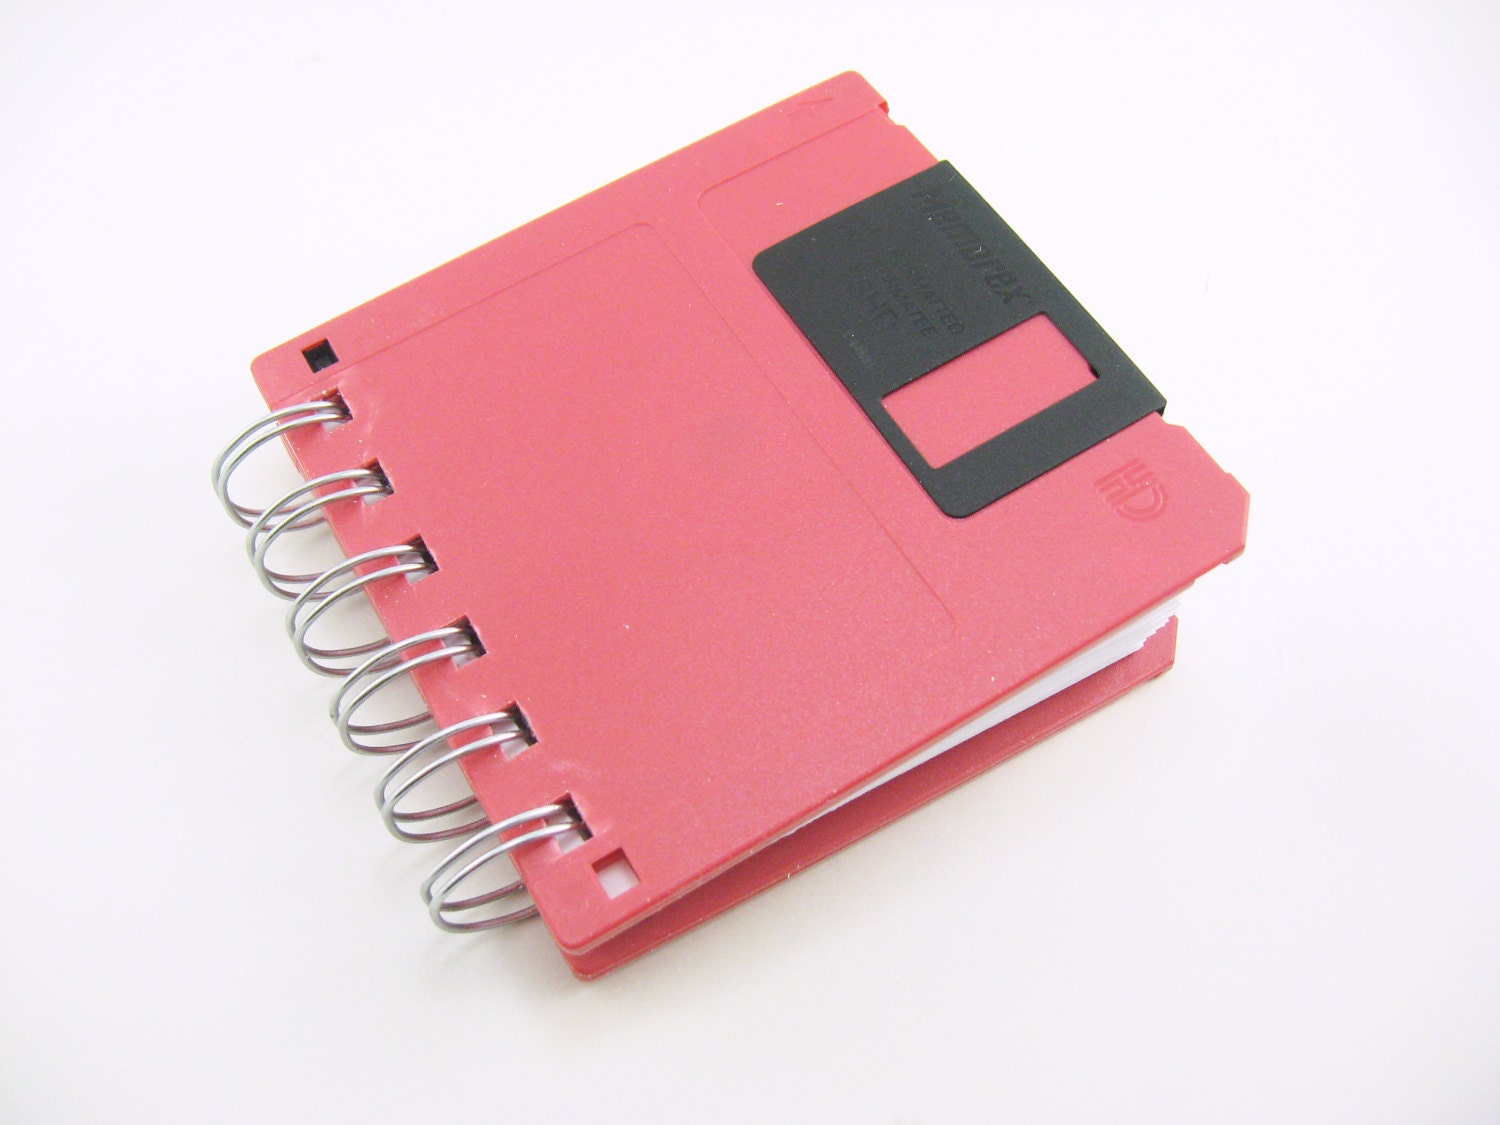 blank floppy disk image creator